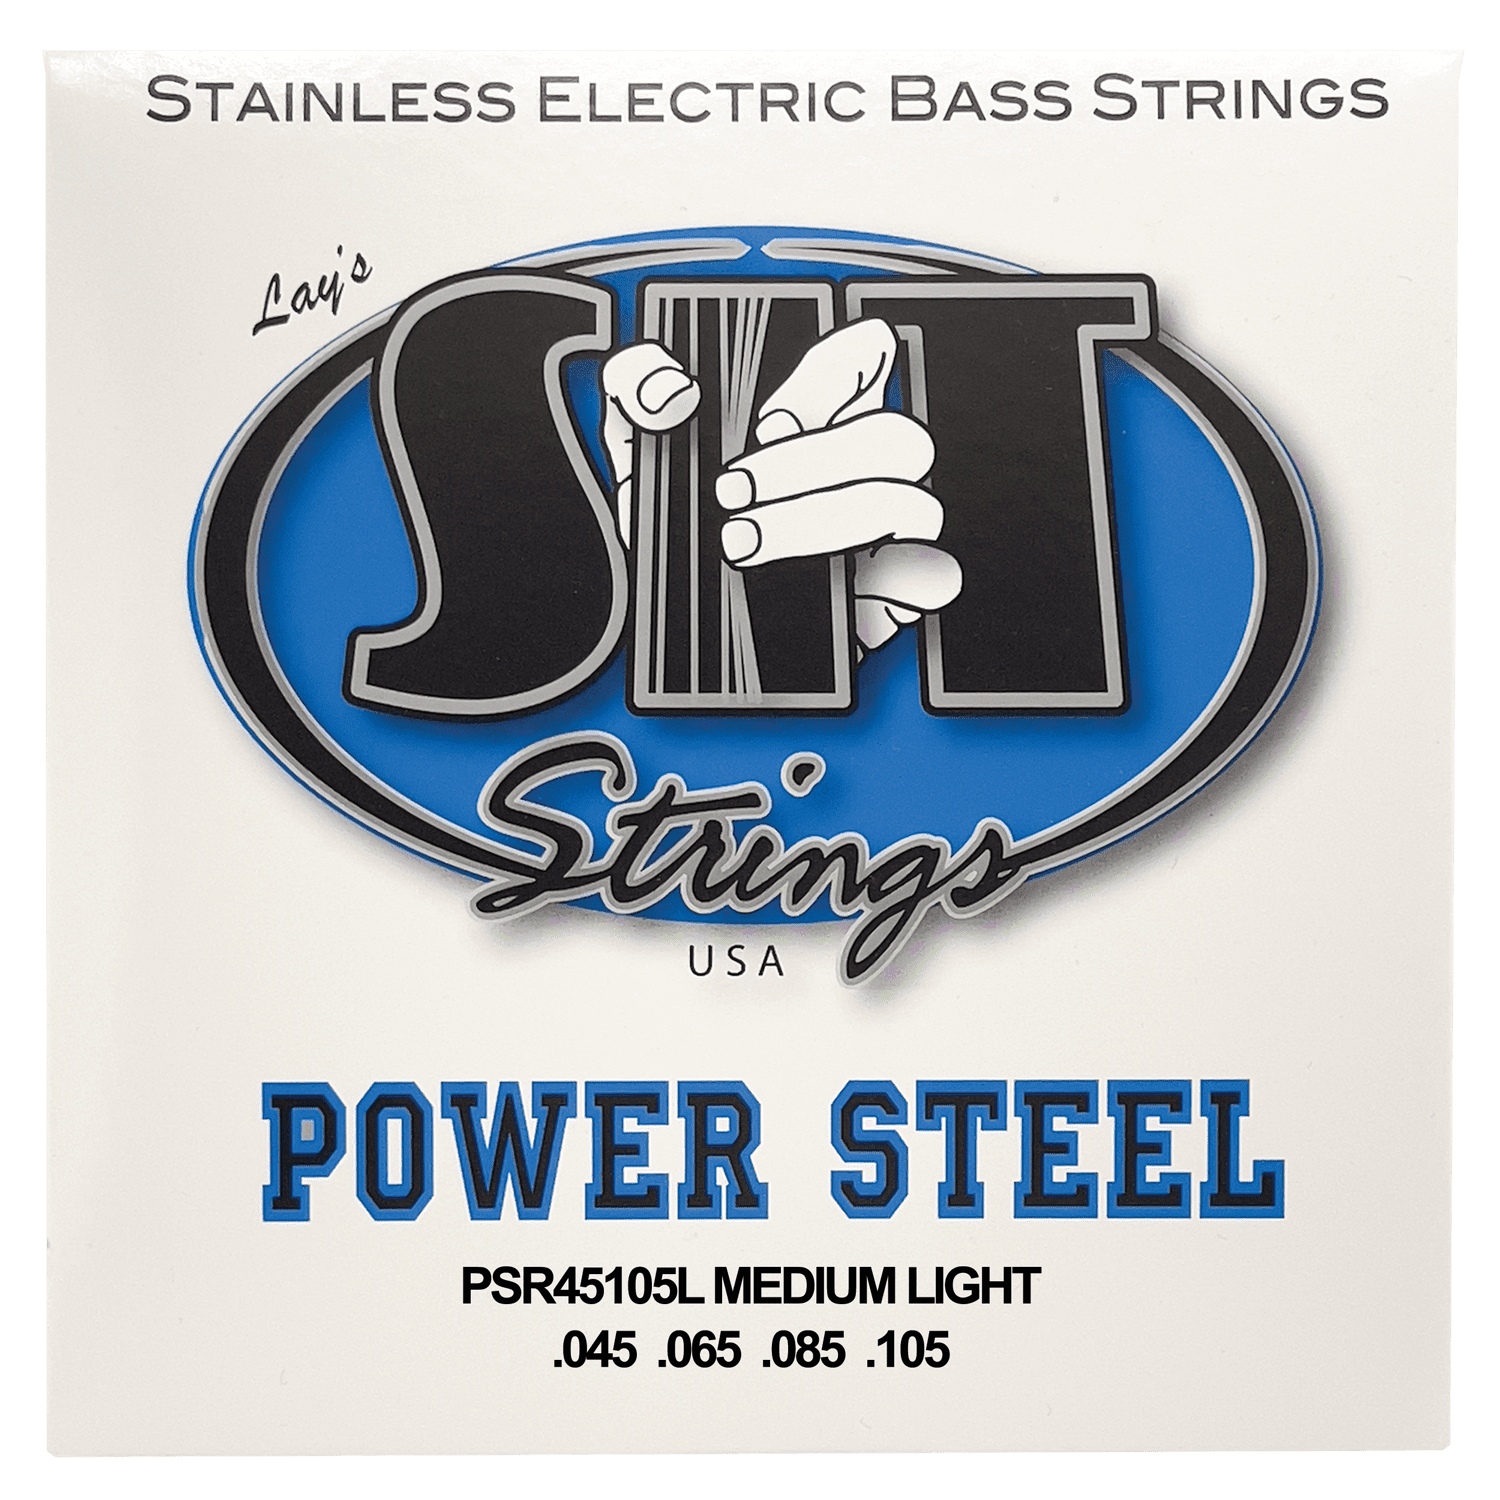 SIT POWER STEEL STAINLESS STEEL BASS - HIENDGUITAR PSR45105L MEDIUM-LIGHT PSR45105L MEDIUM-LIGHT SIT Bass Strings